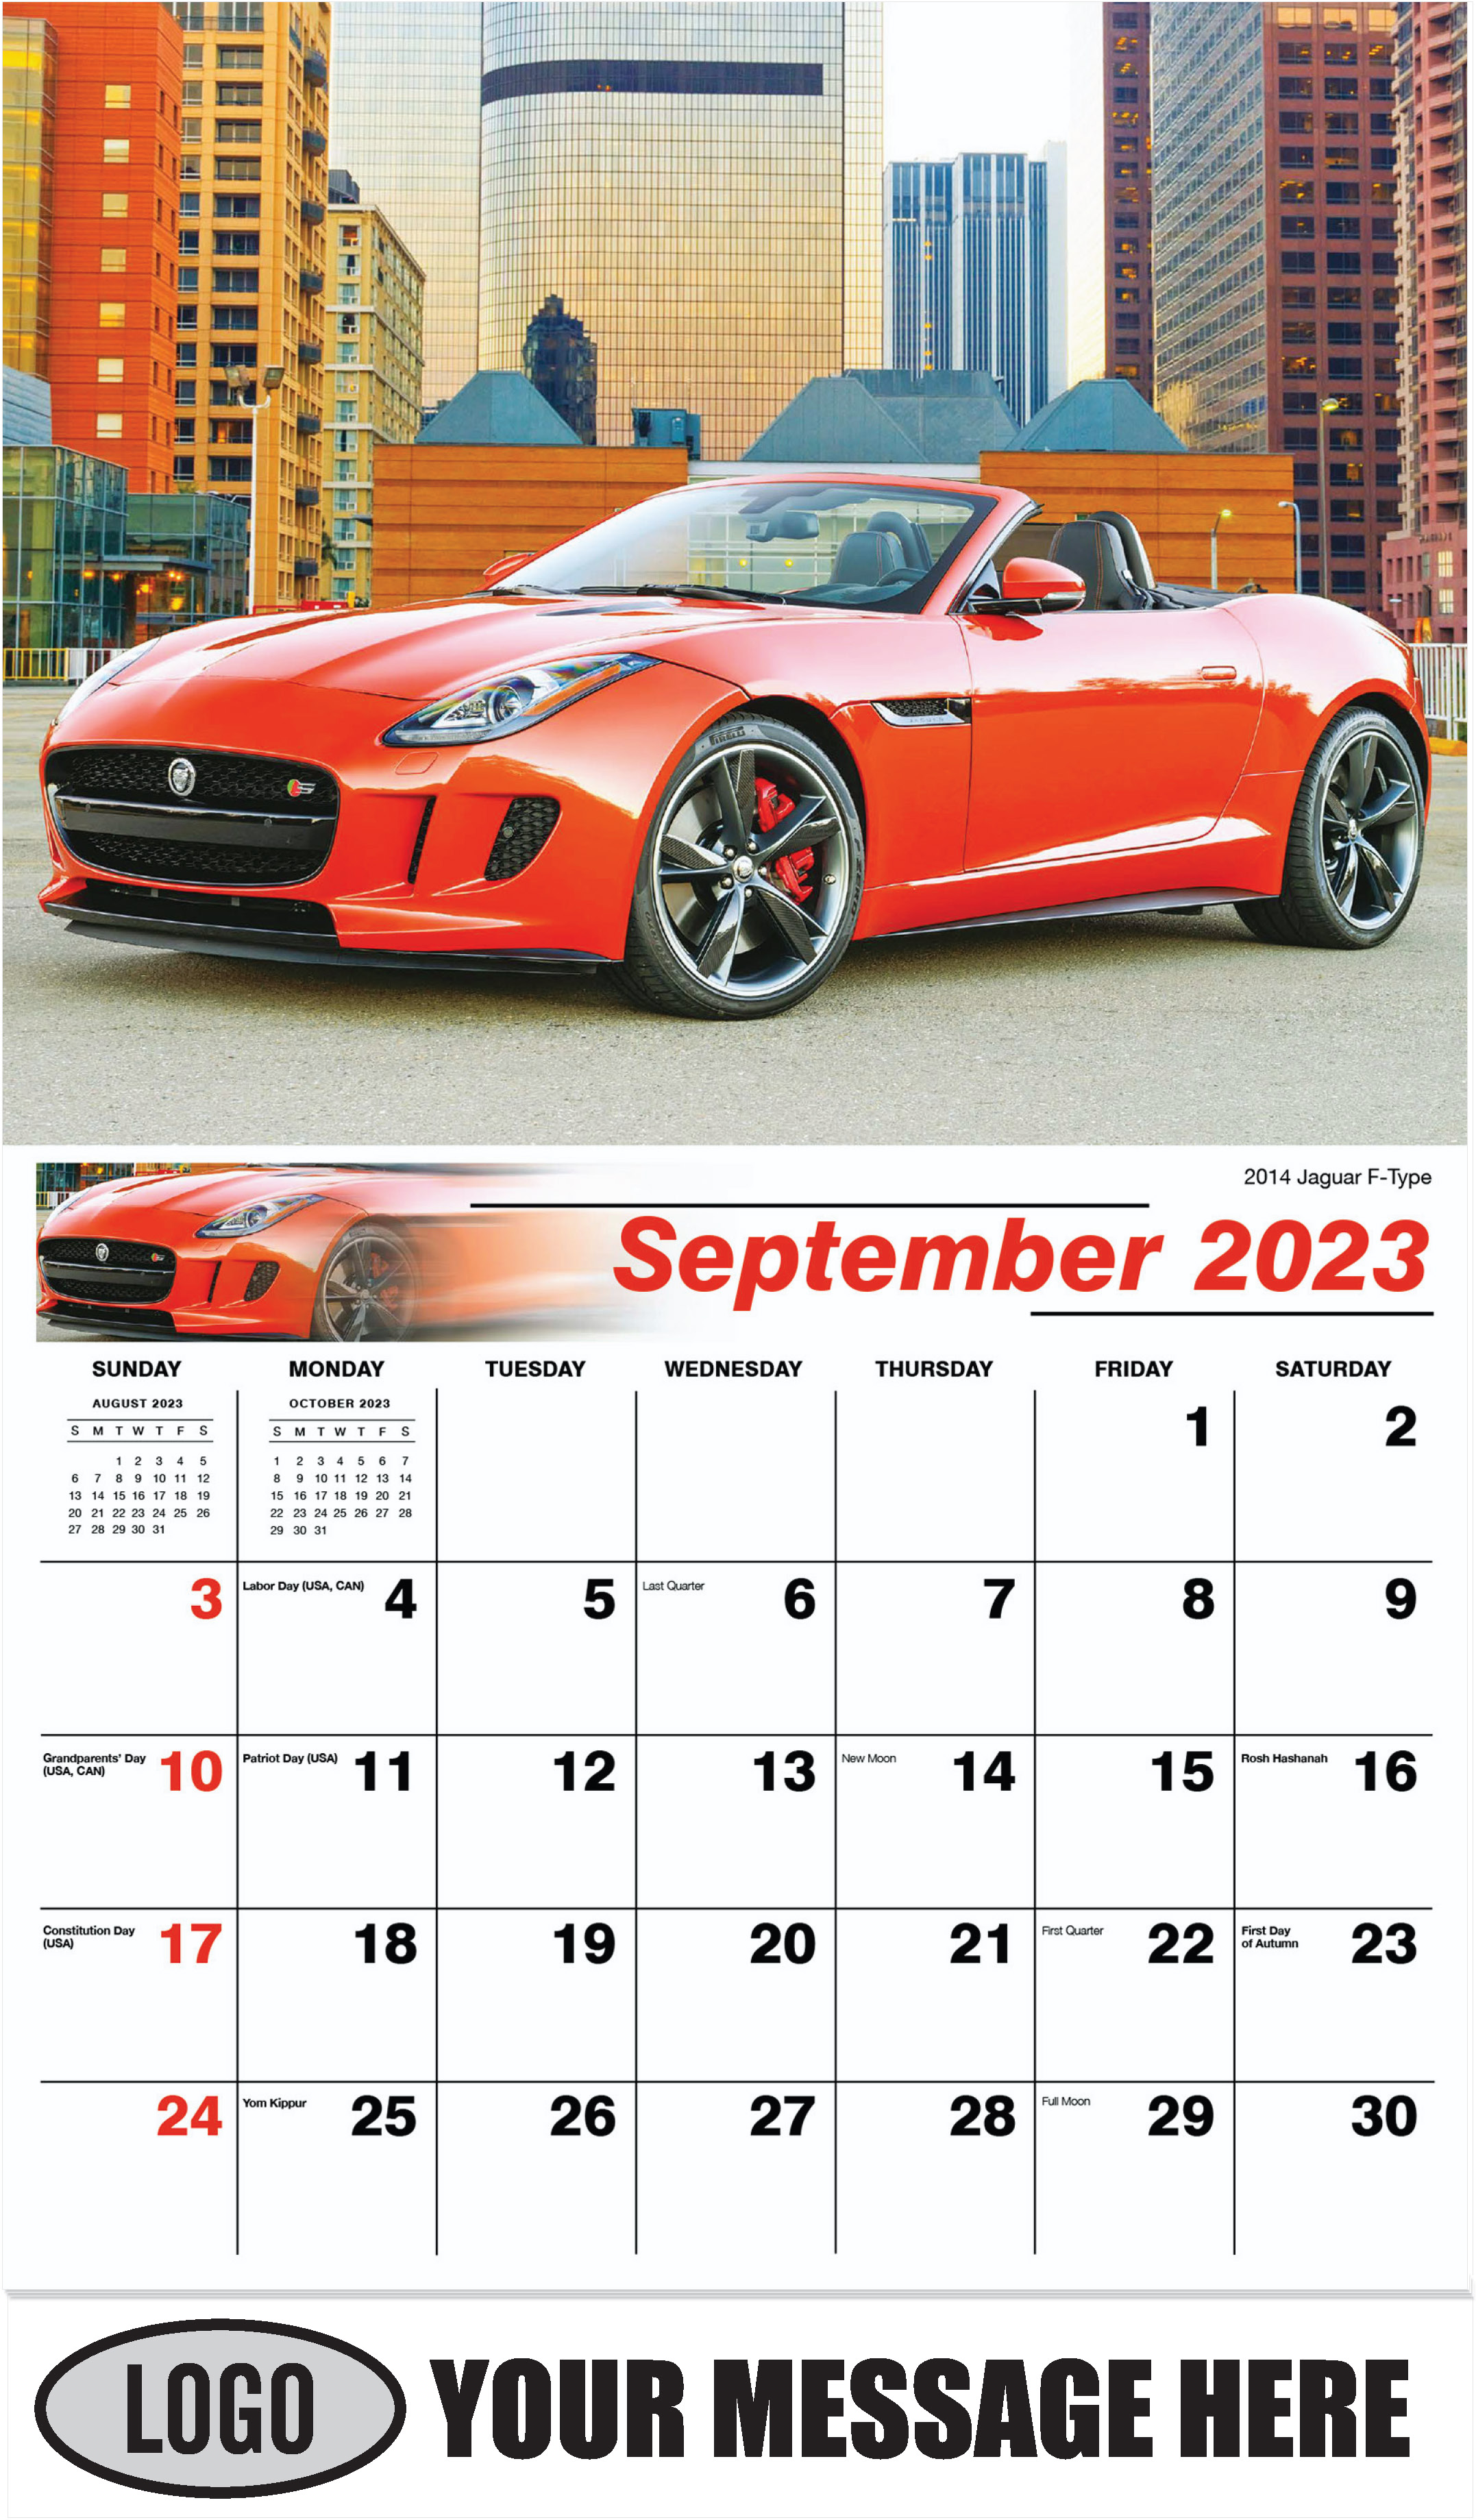 2014 Jaguar F-Type - September - Exotic Cars 2023 Promotional Calendar